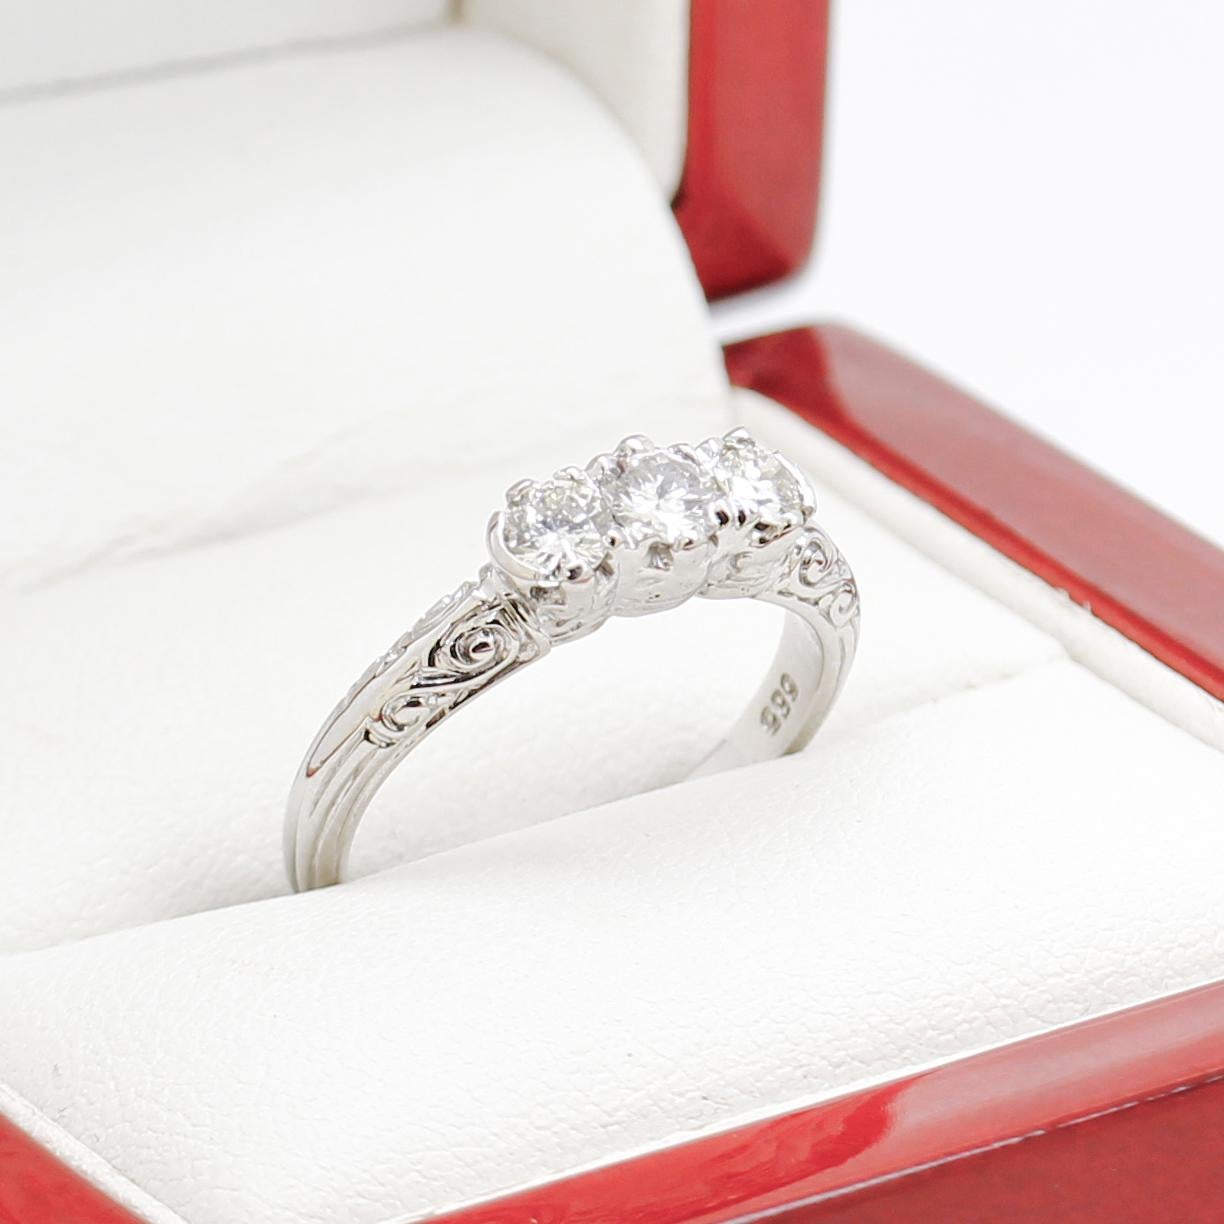 Women's Art Deco Engagement Ring, White Gold Diamond Trilogy Ring For Sale